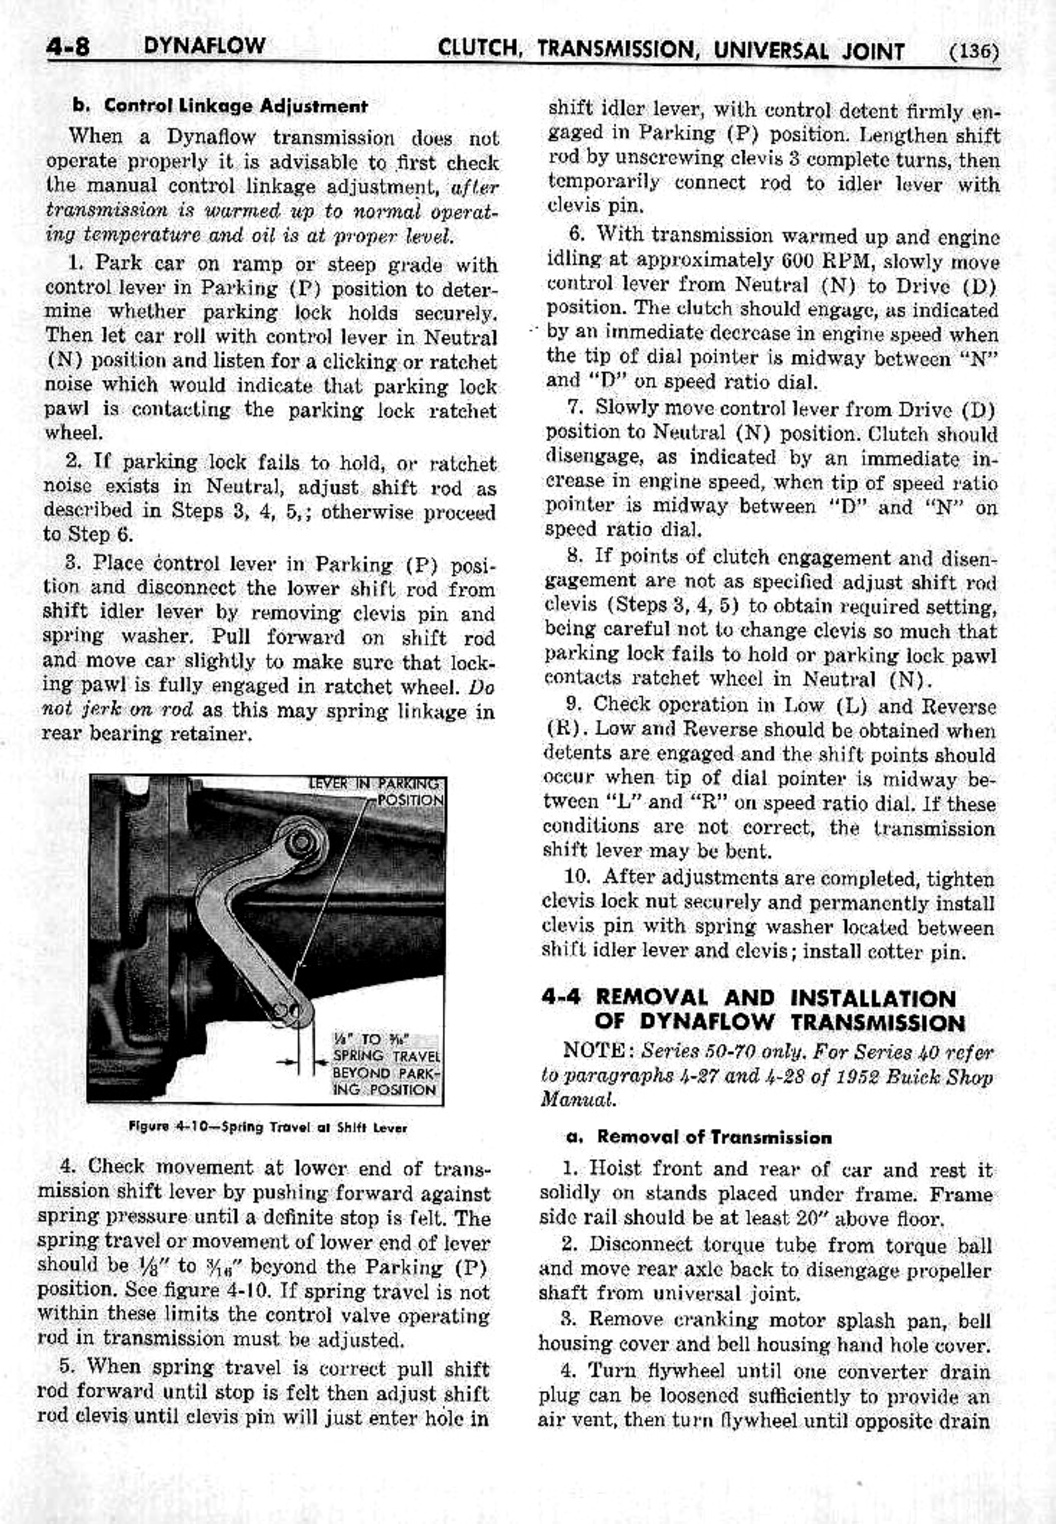 n_05 1953 Buick Shop Manual - Transmission-008-008.jpg